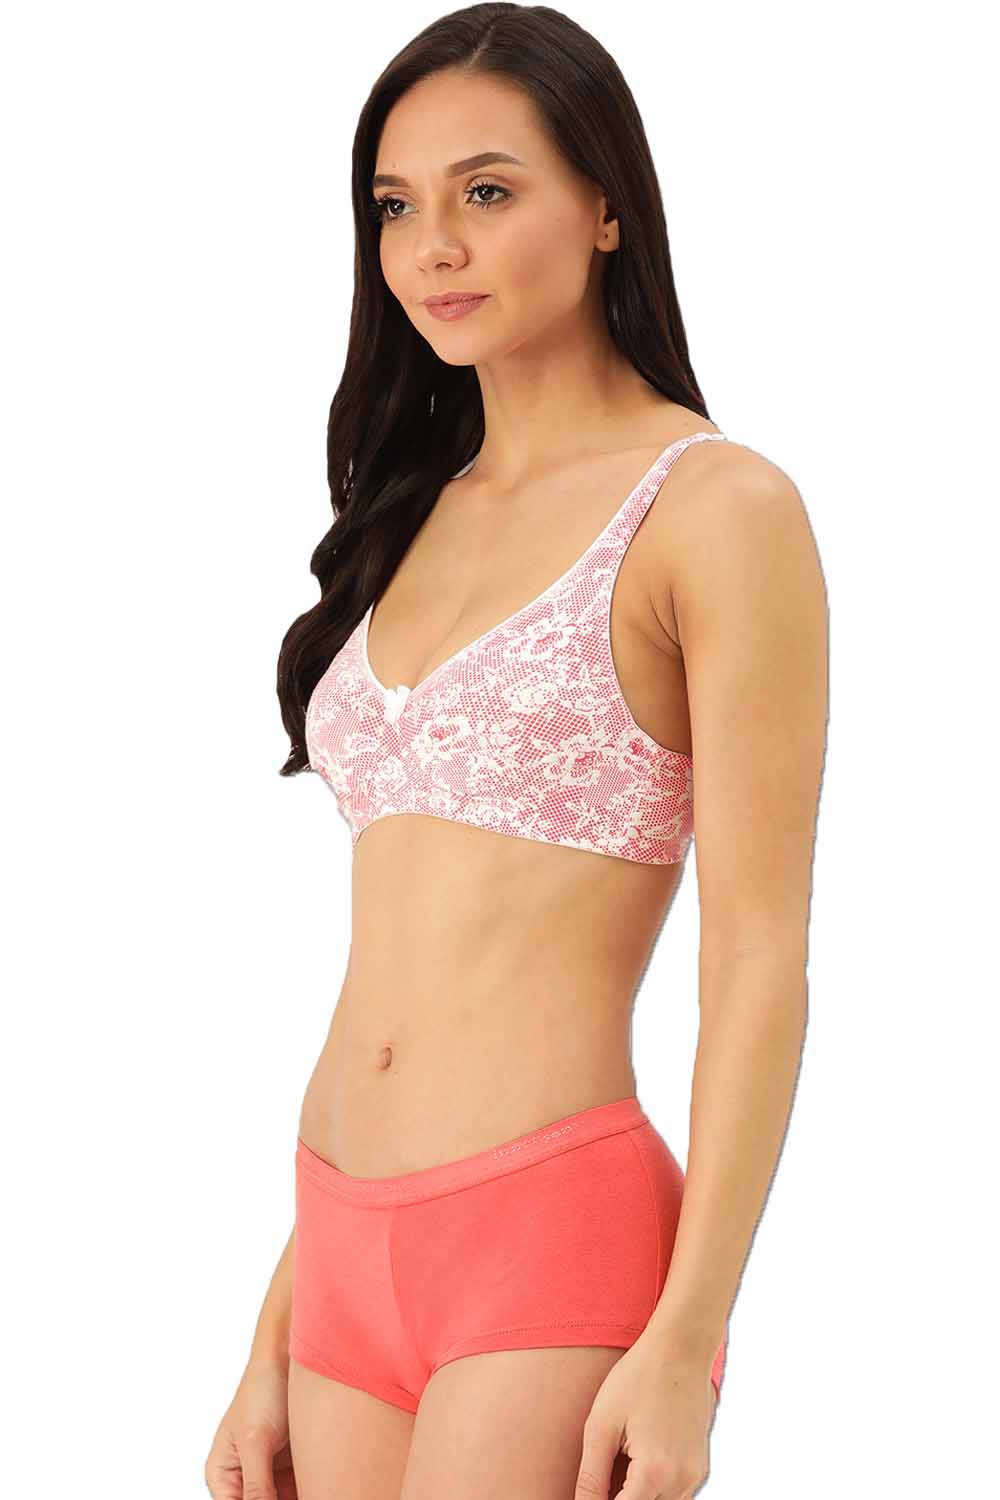 Odeerbi Lounge Bras for Women Breathable Sleep Yoga Cotton Bra Tank  Underwear Pink 